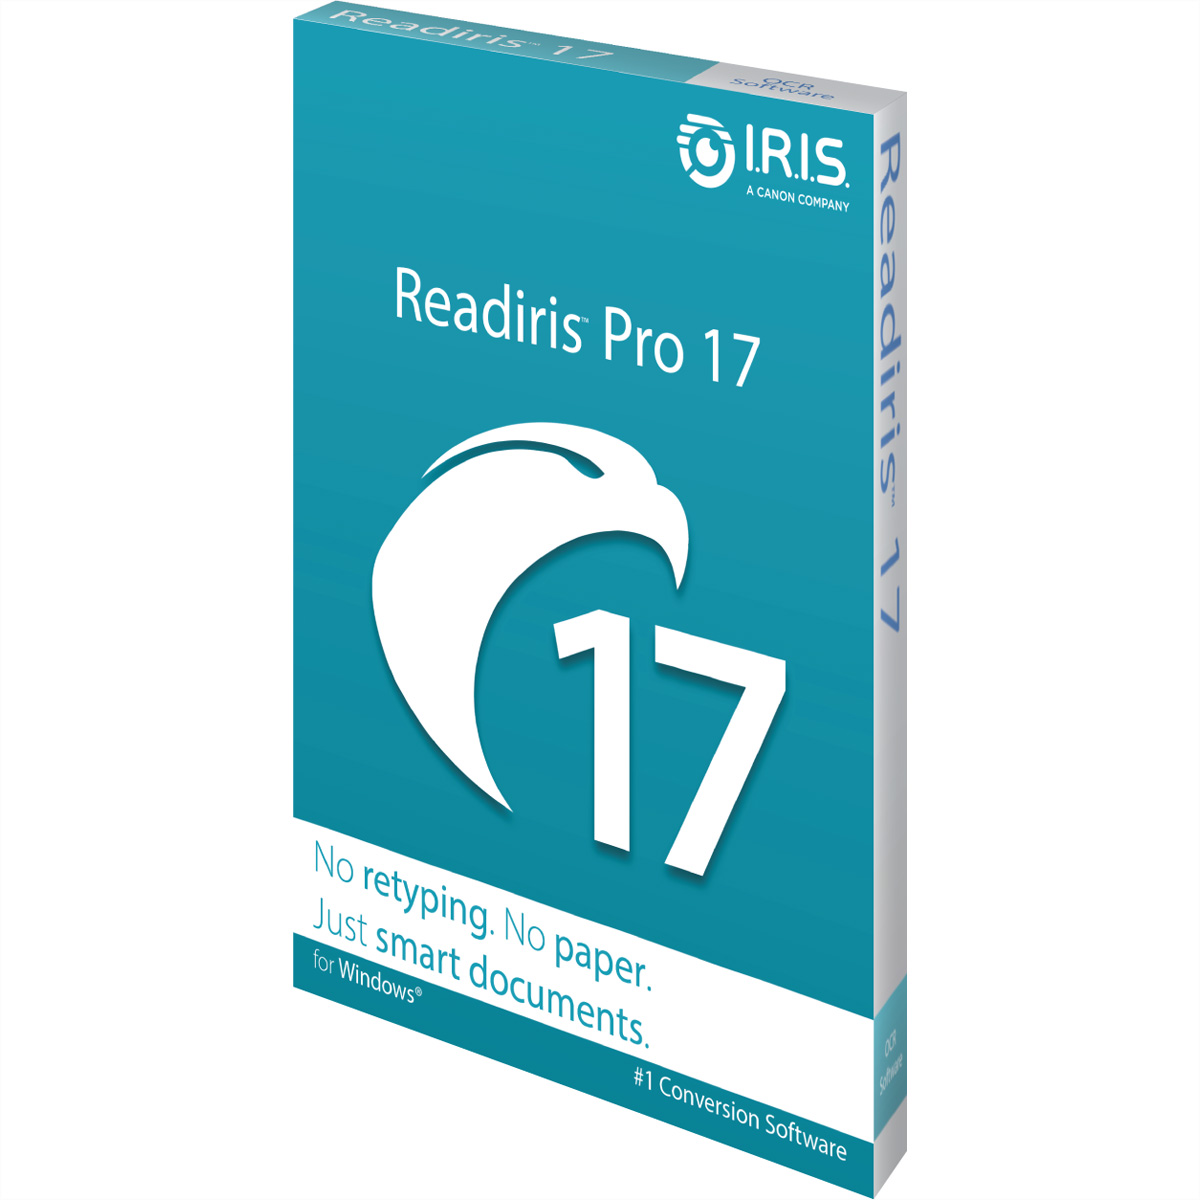 IRIS Readiris Pro 17 PC 1 LIC 1 year maintenance - ESD